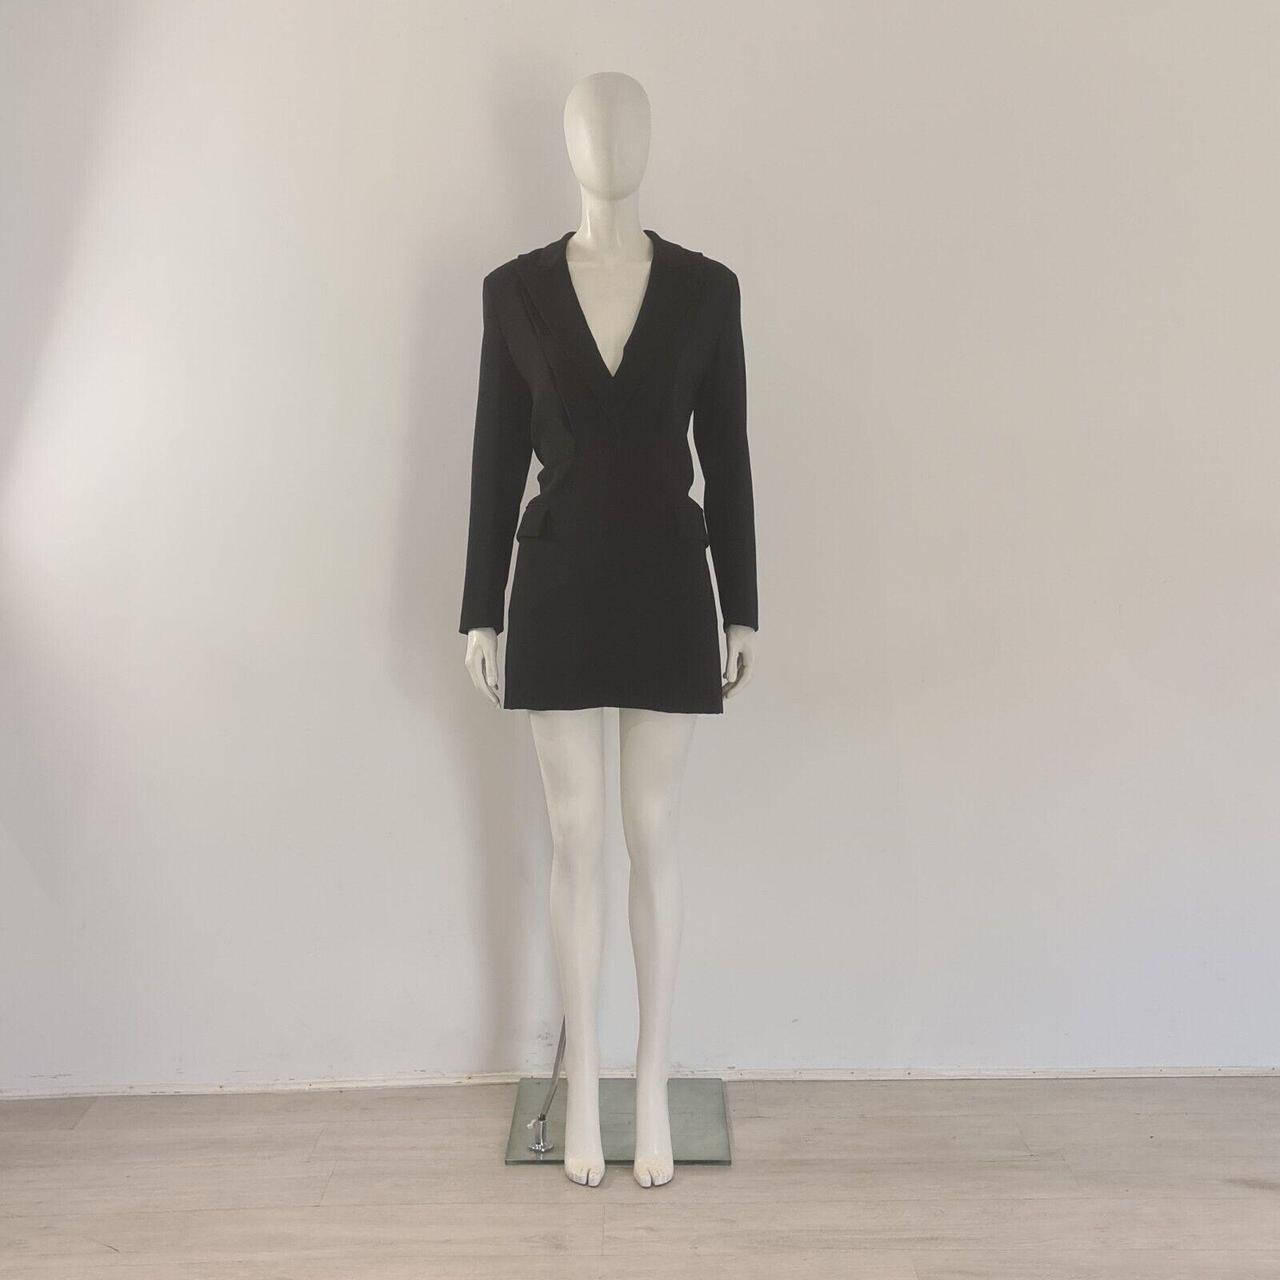 REISS 'Karin' Black Tuxedo Dress Size UK 12 EU 40... - Depop